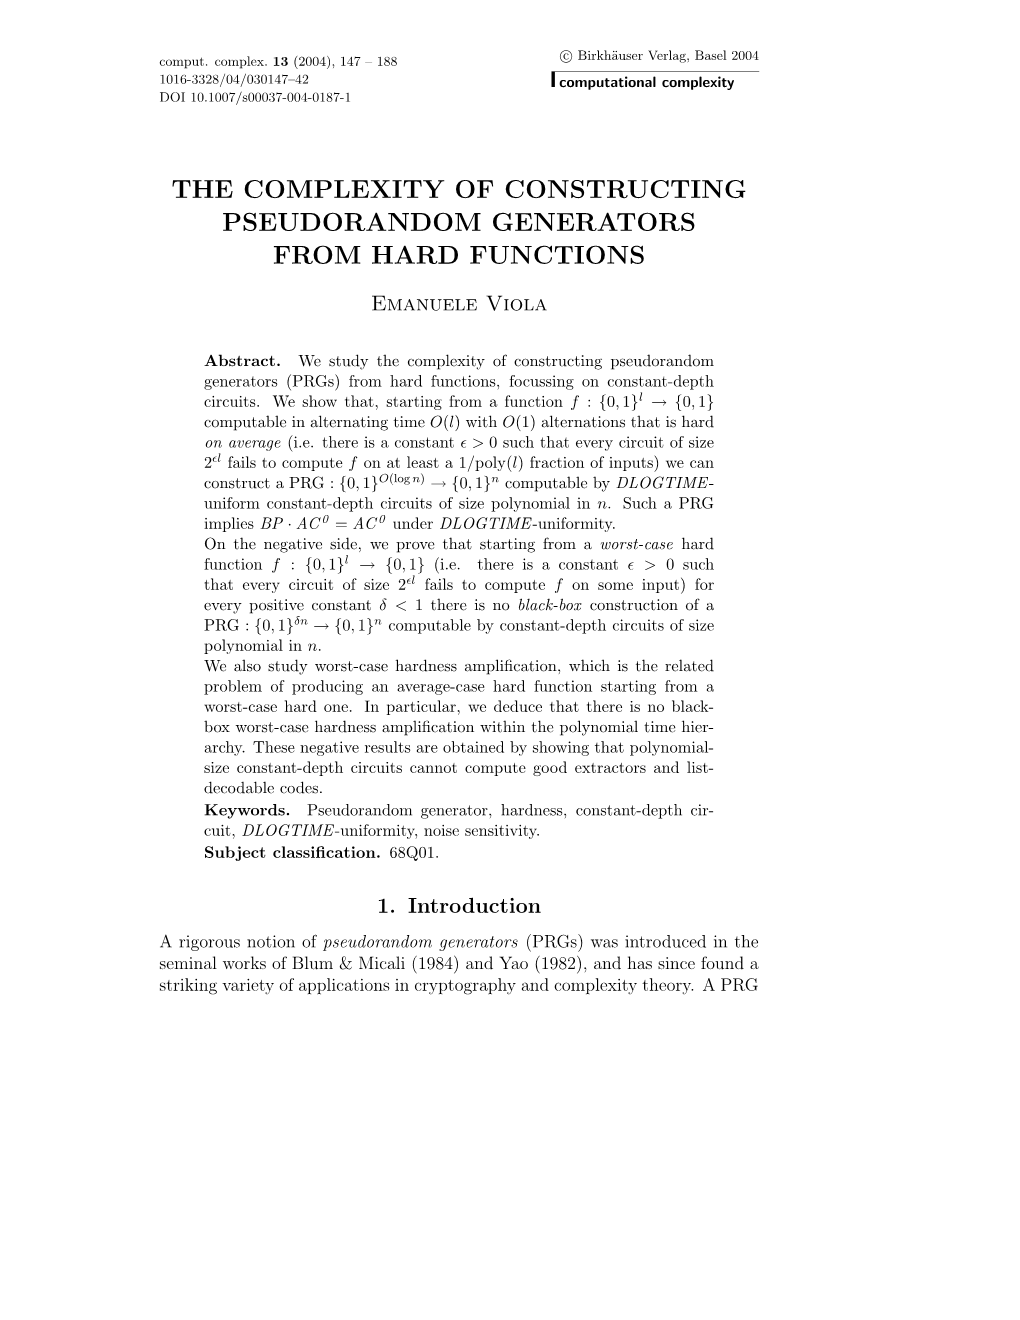 The Complexity of Constructing Pseudorandom Generators from Hard Functions